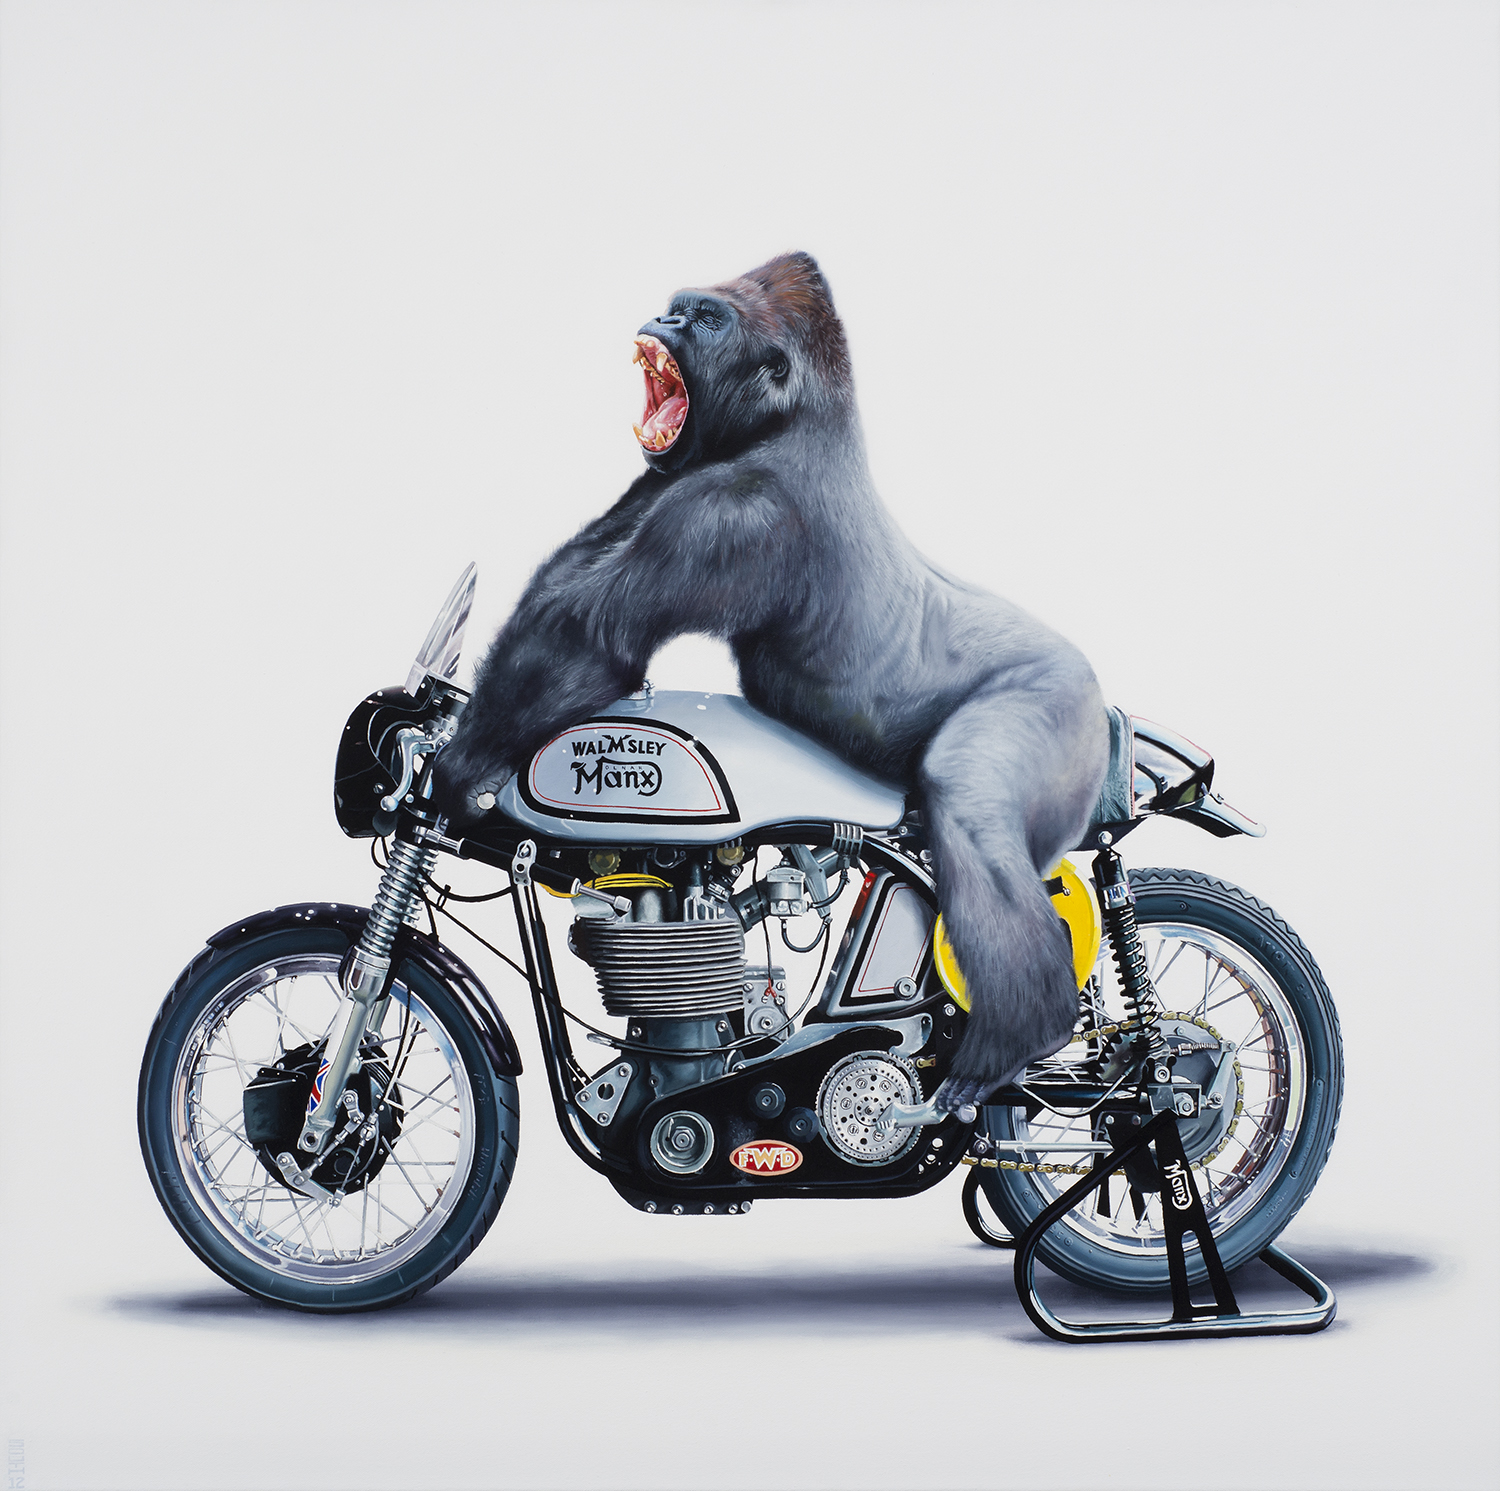 A gorilla on a motorcycle that is braced - Tony South - A Brace of Silverbacks